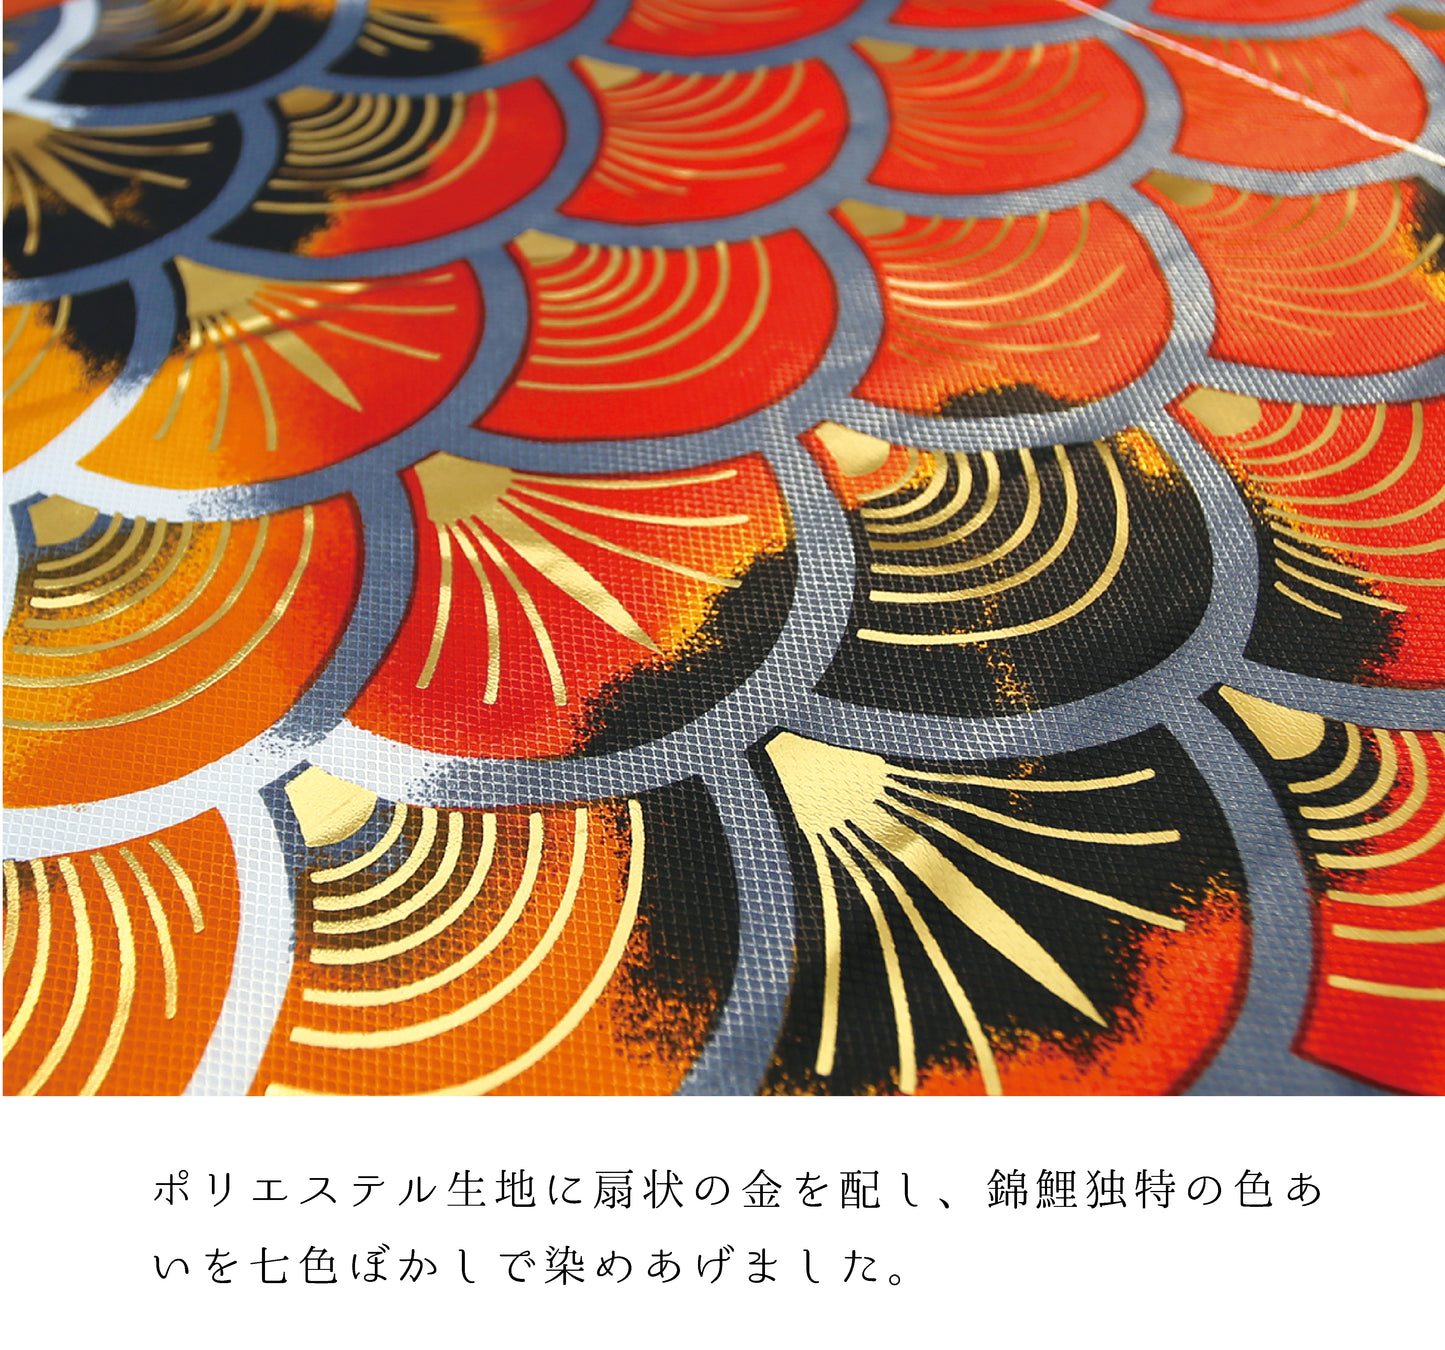 Present hand-dyed Yuzen carp &lt;Kyo Nishiki&gt; 6 pieces Garden stand set (arrow, rope, sand bag + pole) Cosmetic box Tokunaga carp streamer Garden stand set 